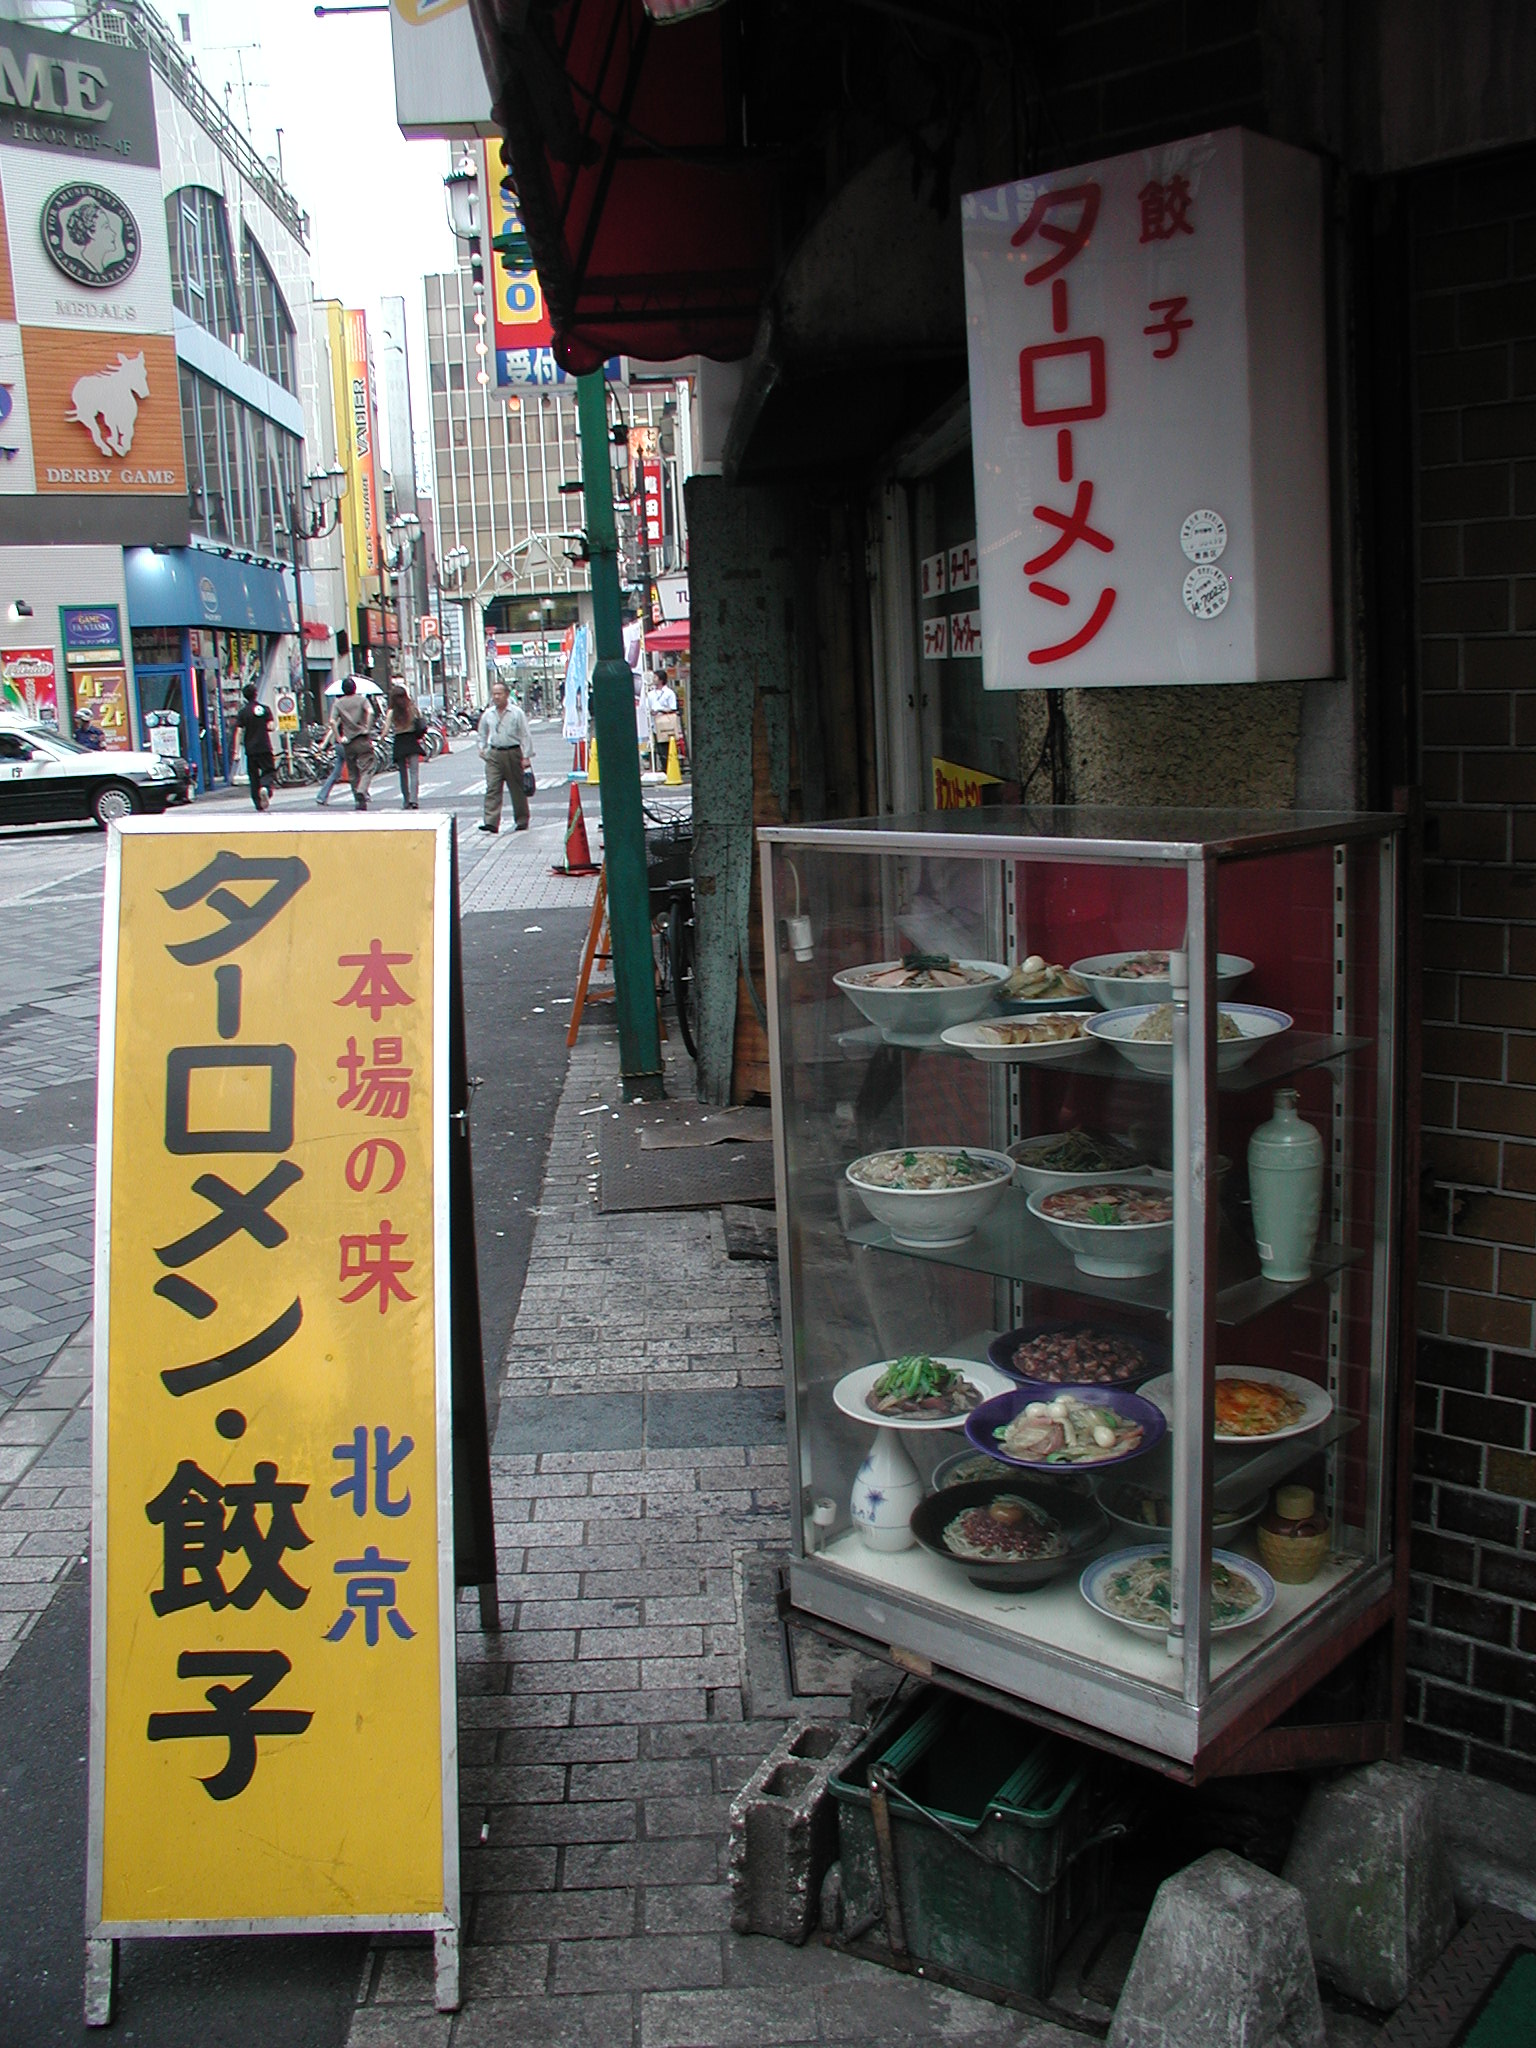 Su Beng's noodle shop in Tokyo, Japan (August 2005)